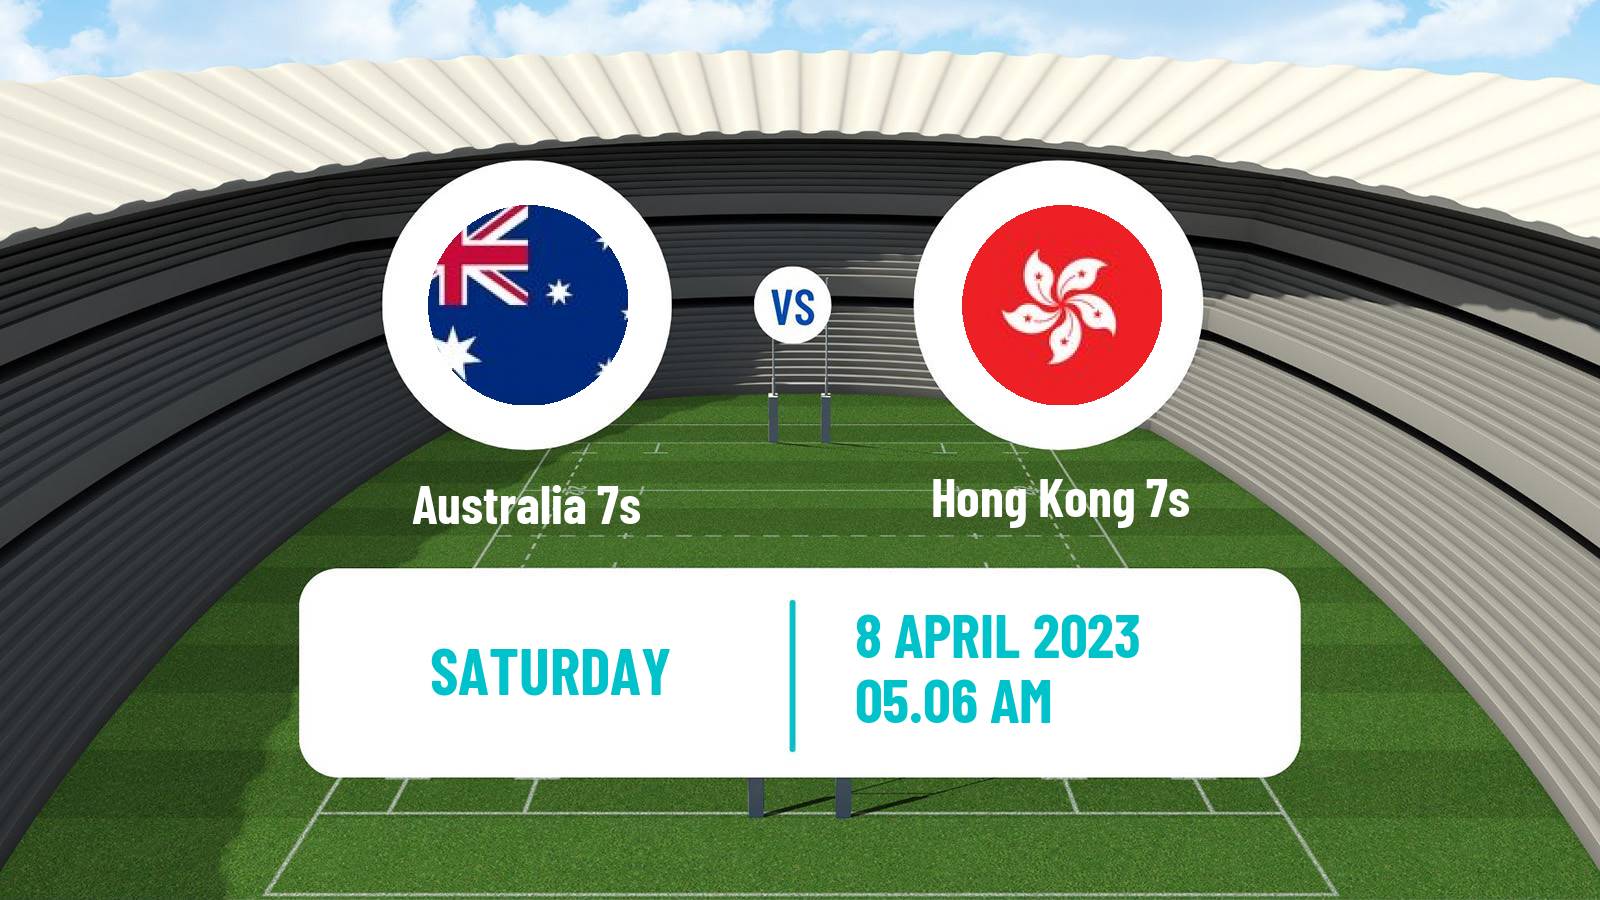 Rugby union Sevens World Series - Singapore Australia 7s - Hong Kong 7s